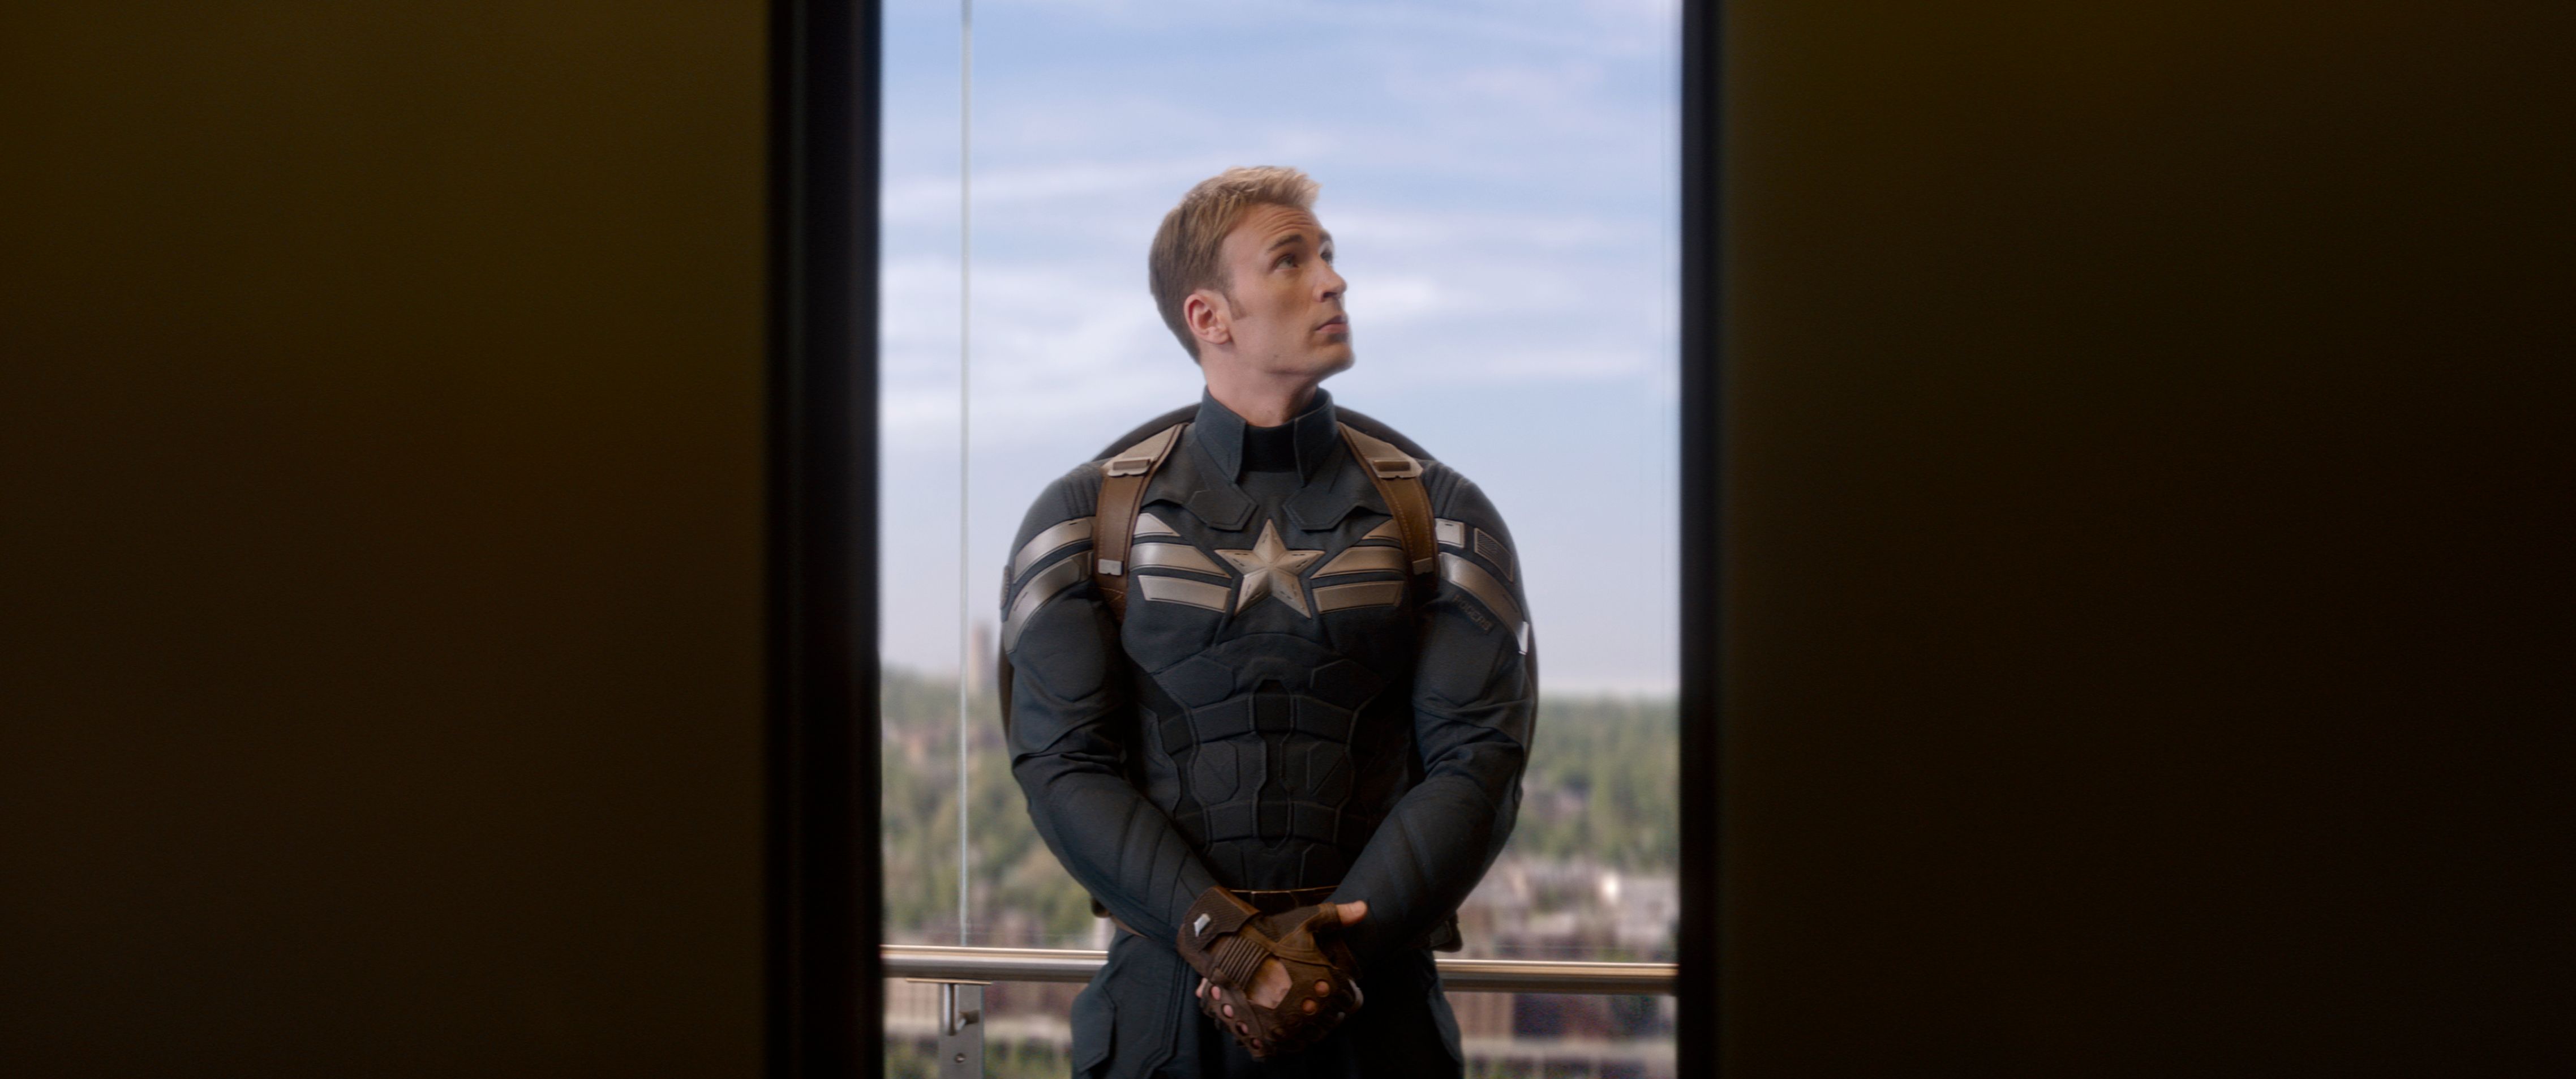 Captain America: The Winter Soldier Photo 4